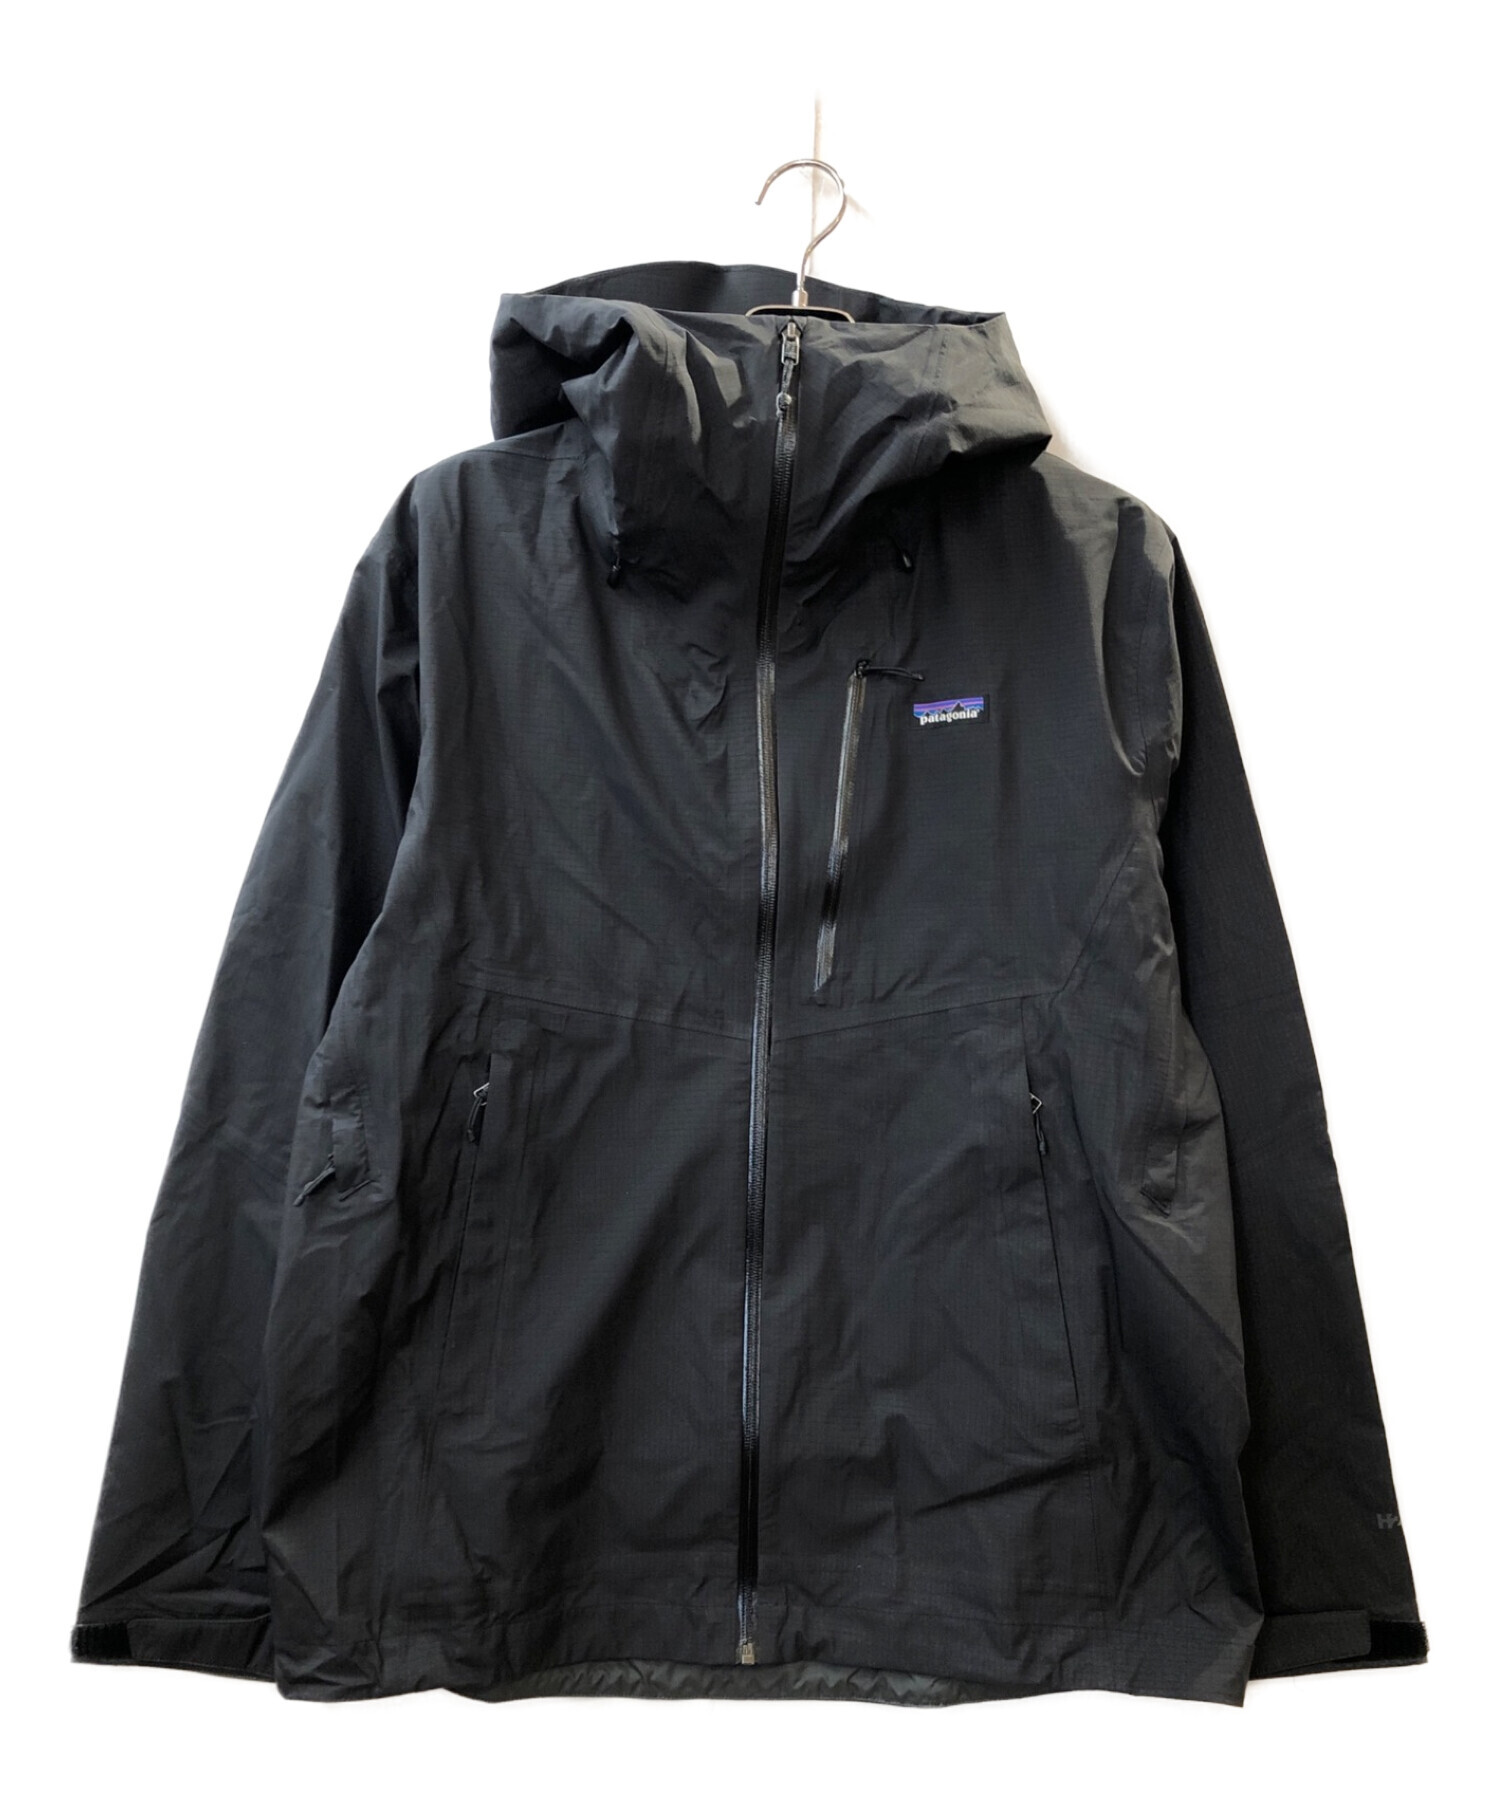 Patagonia Granite Crest jacket Lサイズ宜しくお願いします